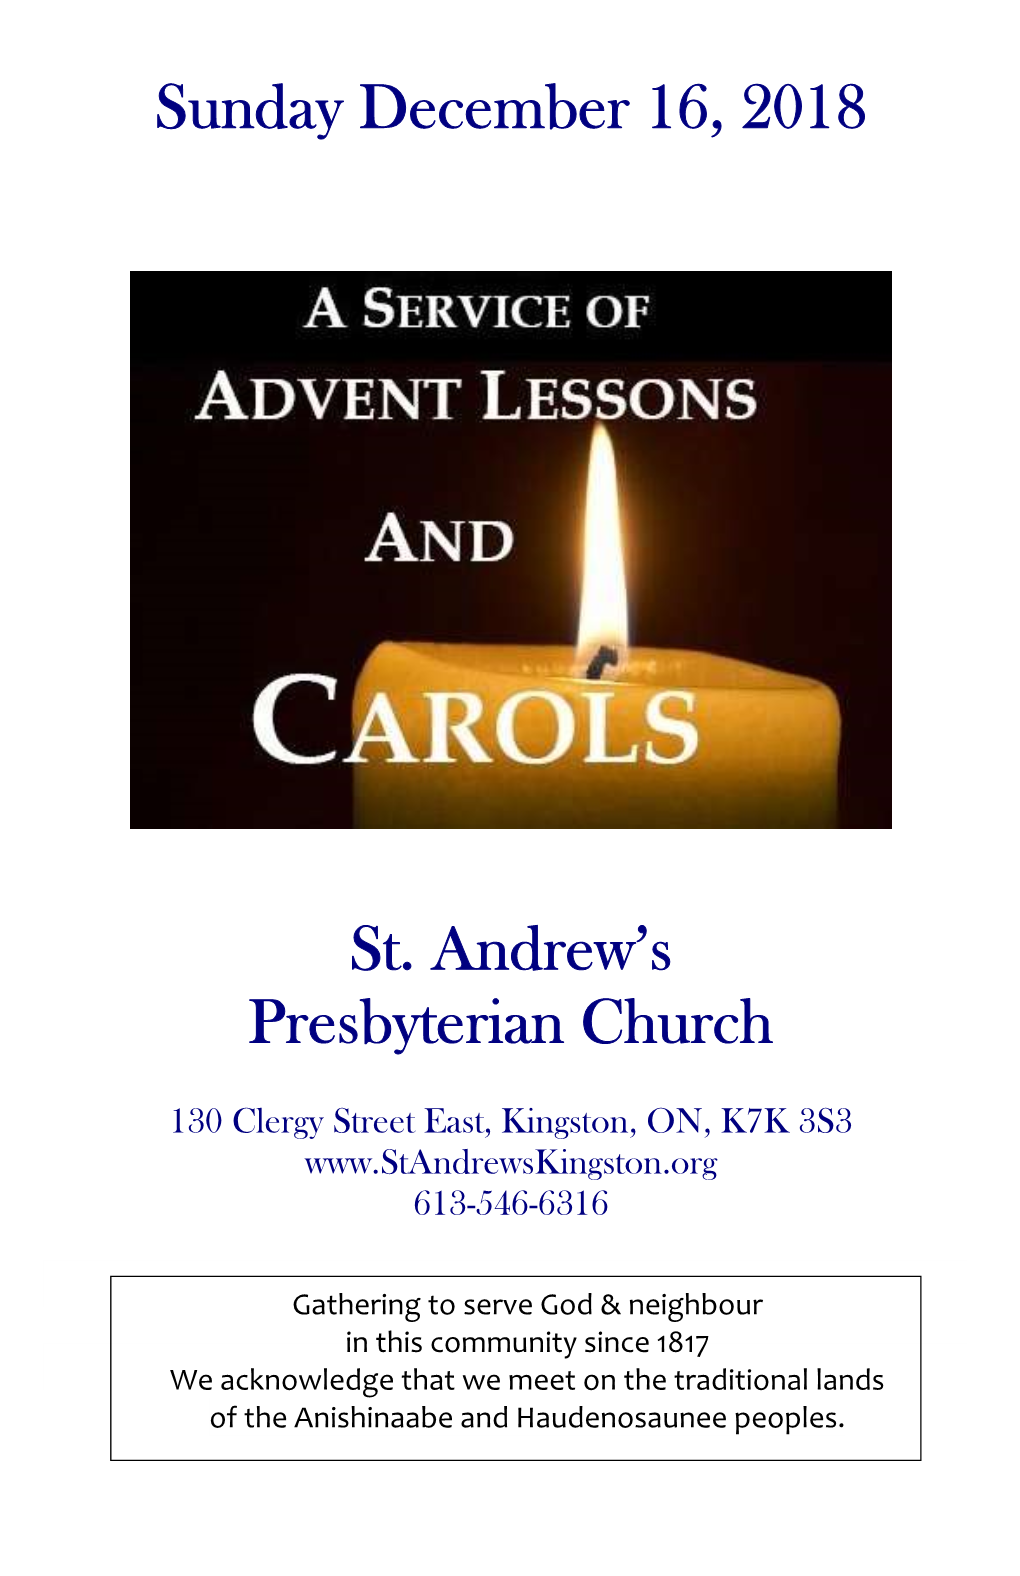 Sunday December 16, 2018 St. Andrew's Presbyterian Church